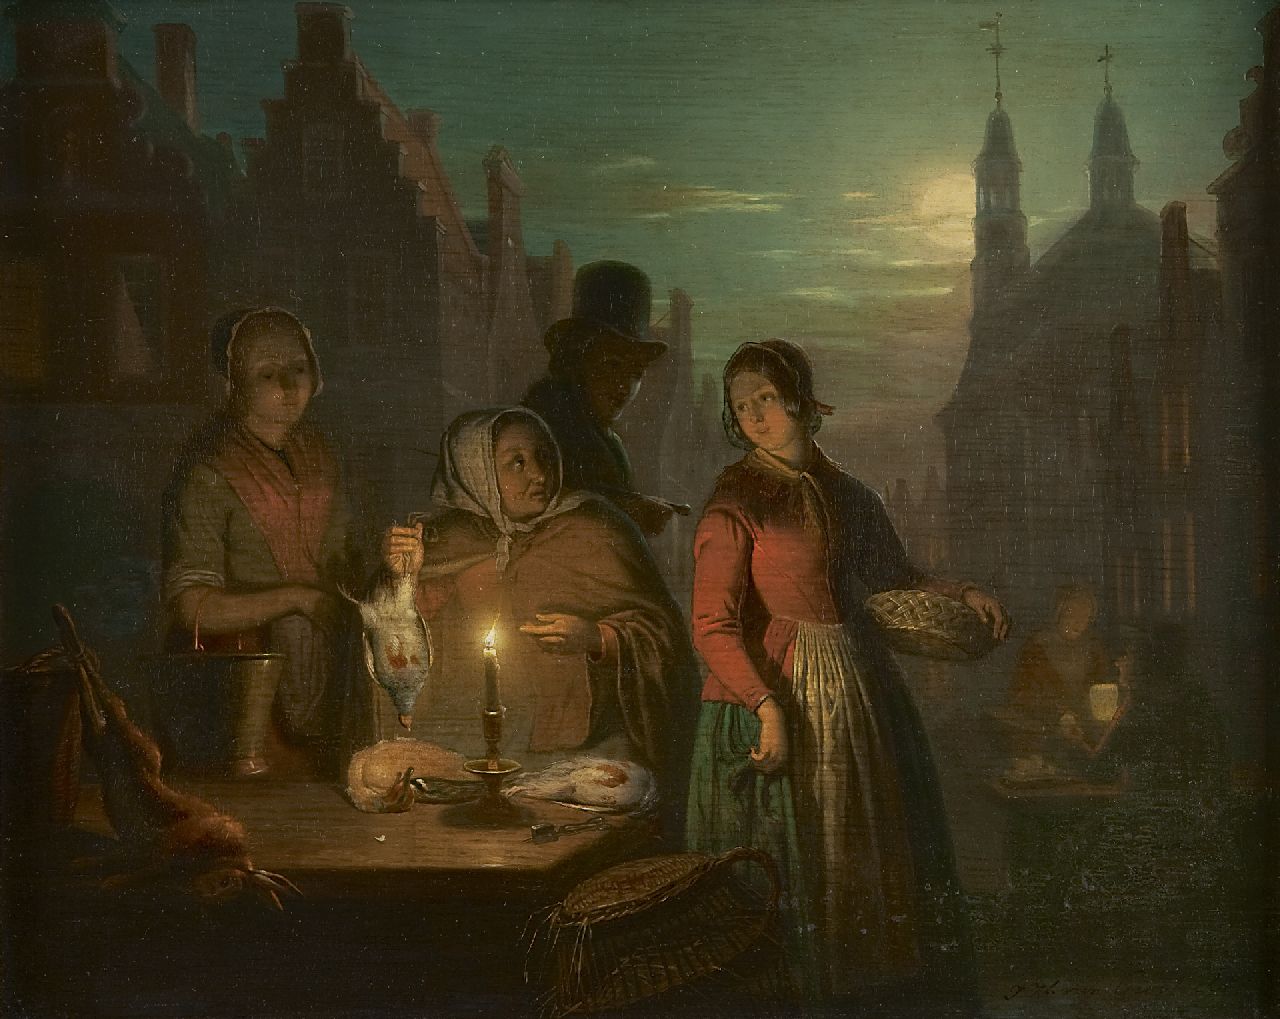 Grootvelt J.H. van | Jan Hendrik van Grootvelt, The evening market in Ravenstein, oil on panel 26.6 x 33.6 cm, signed l.r.